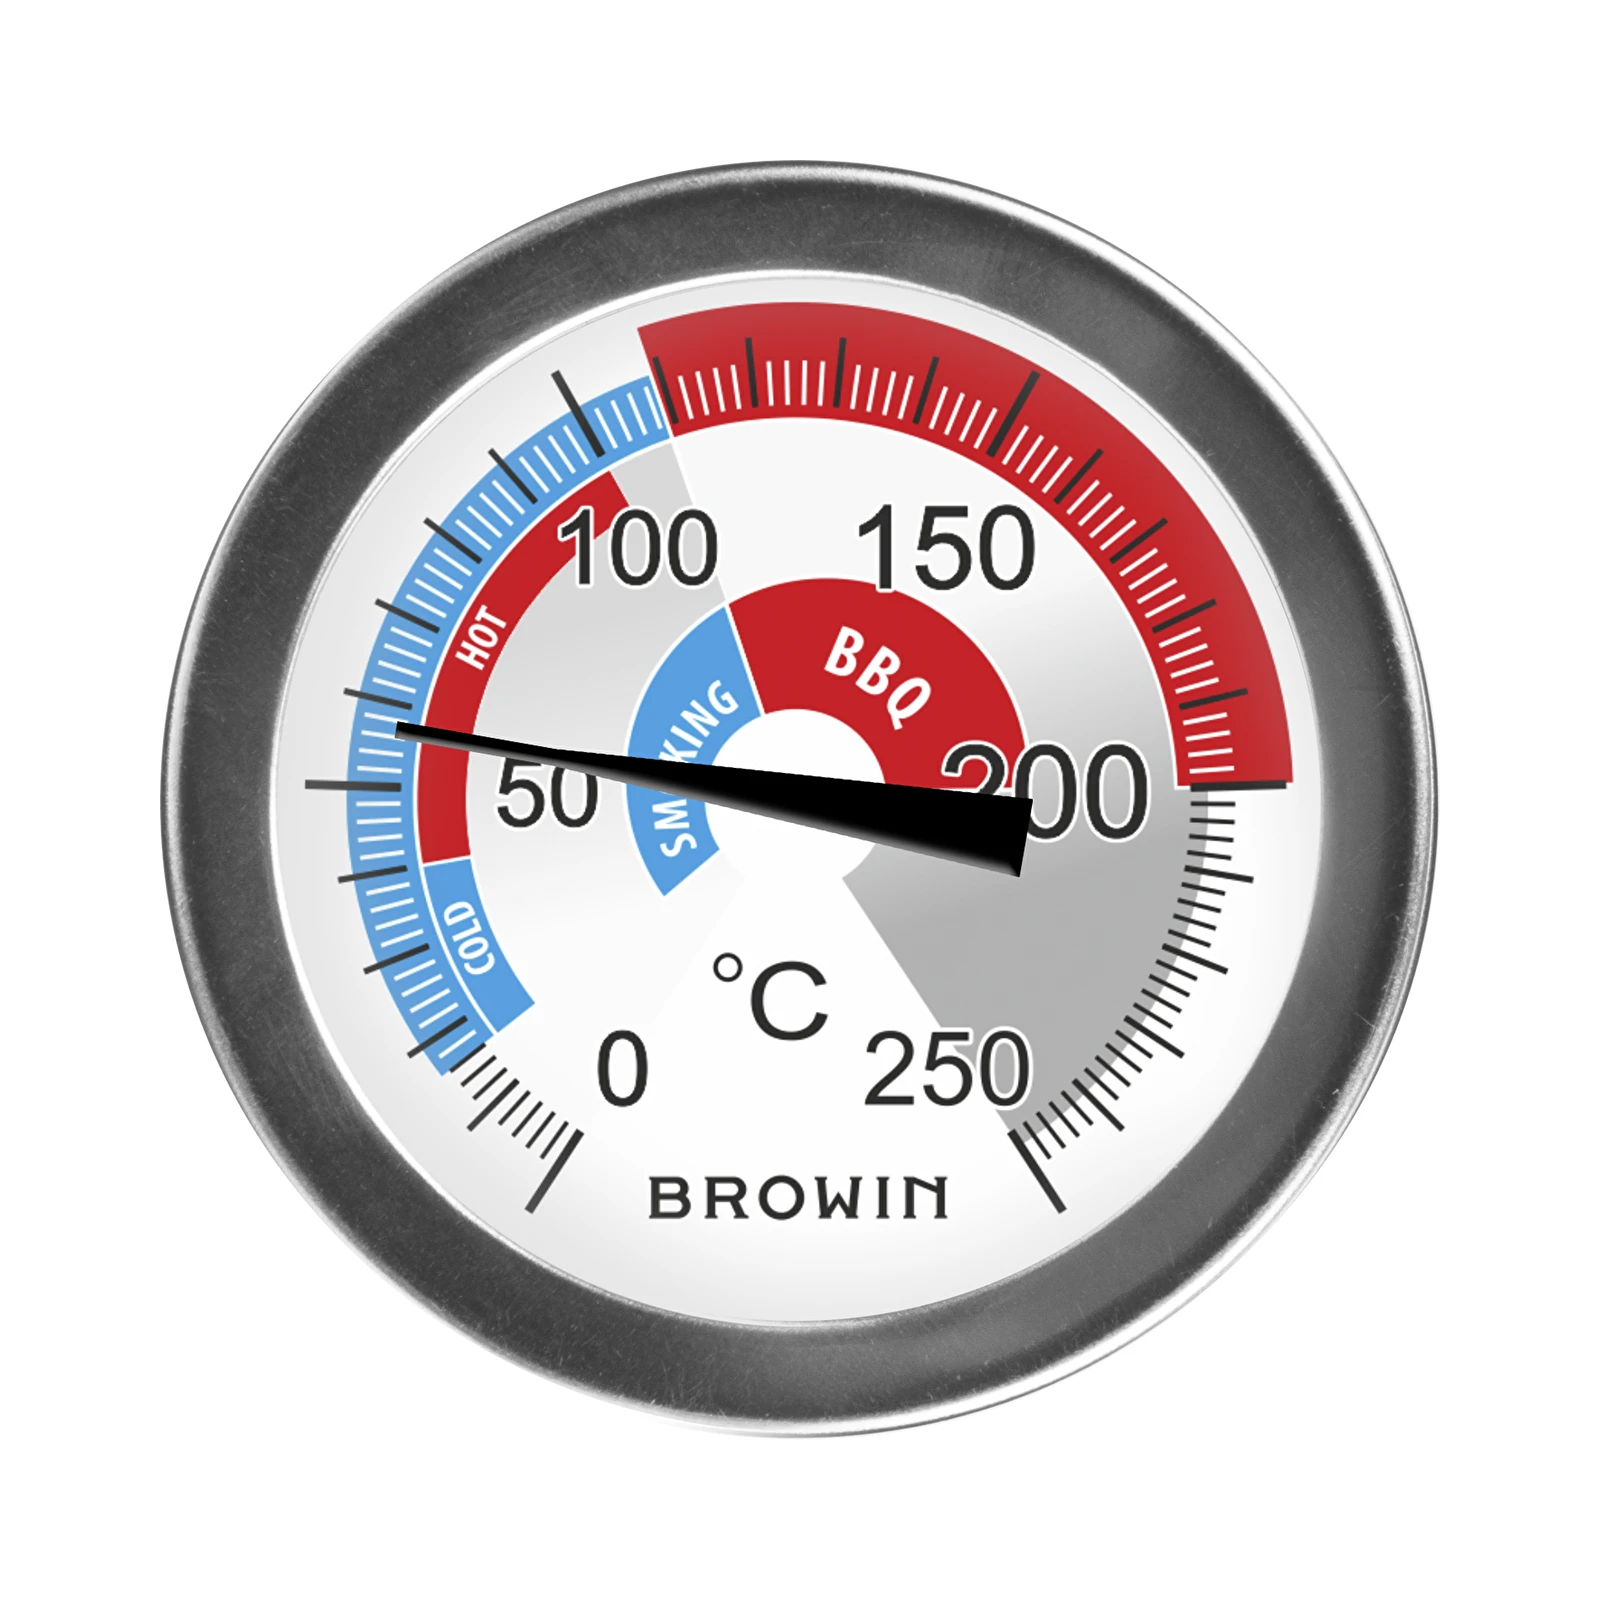 Smoker Thermometer 0°C to 120°C